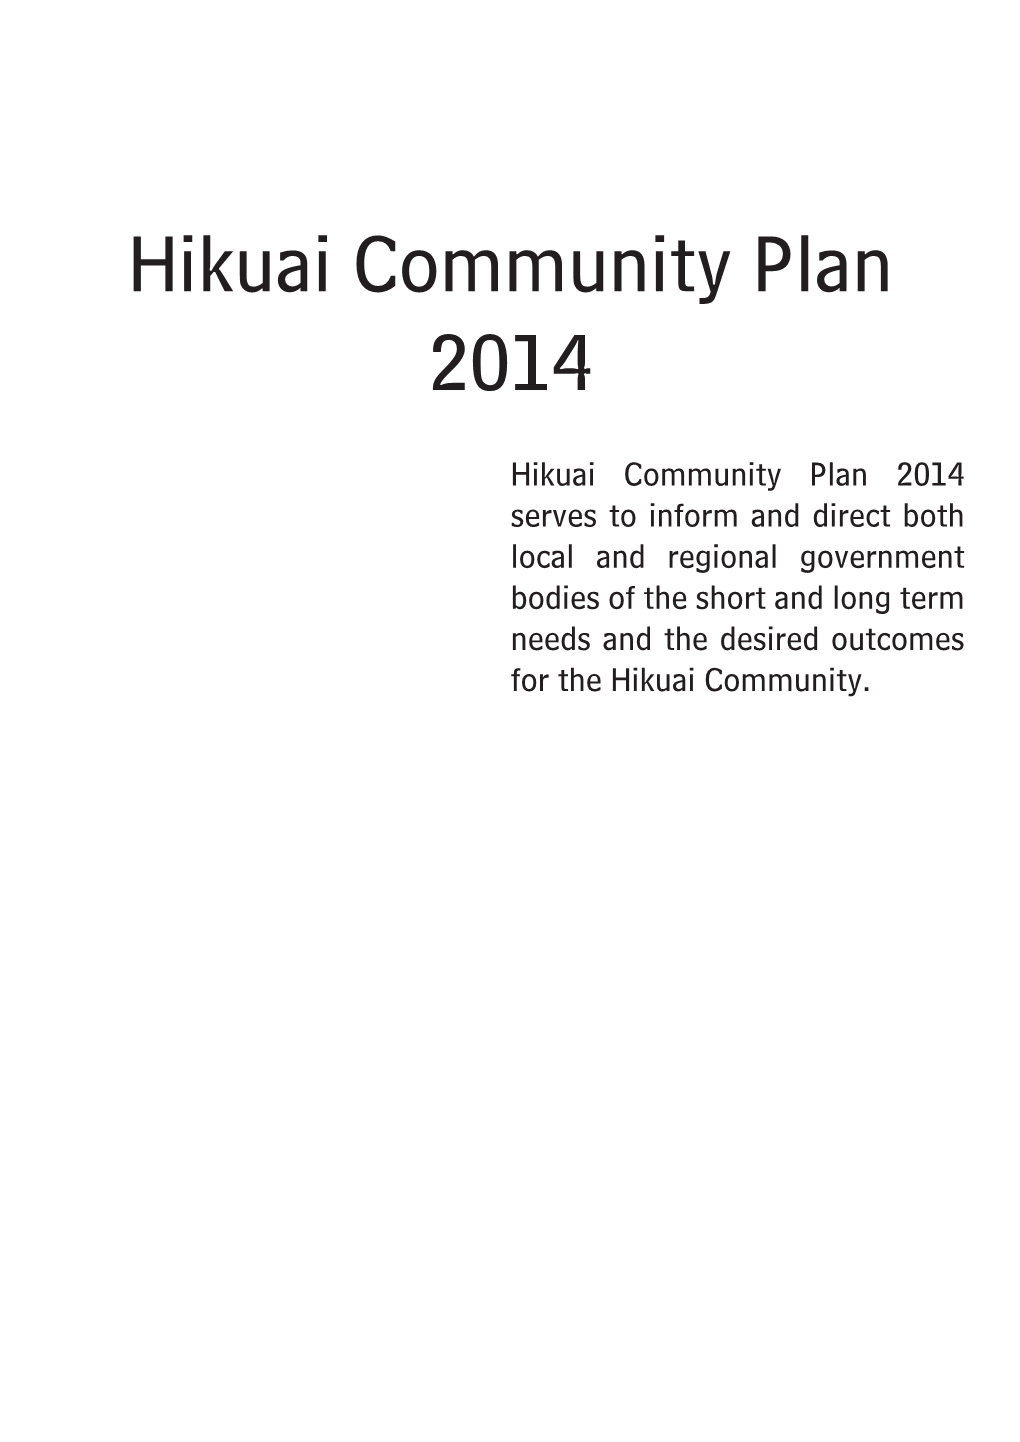 Hikuai Community Plan 2014